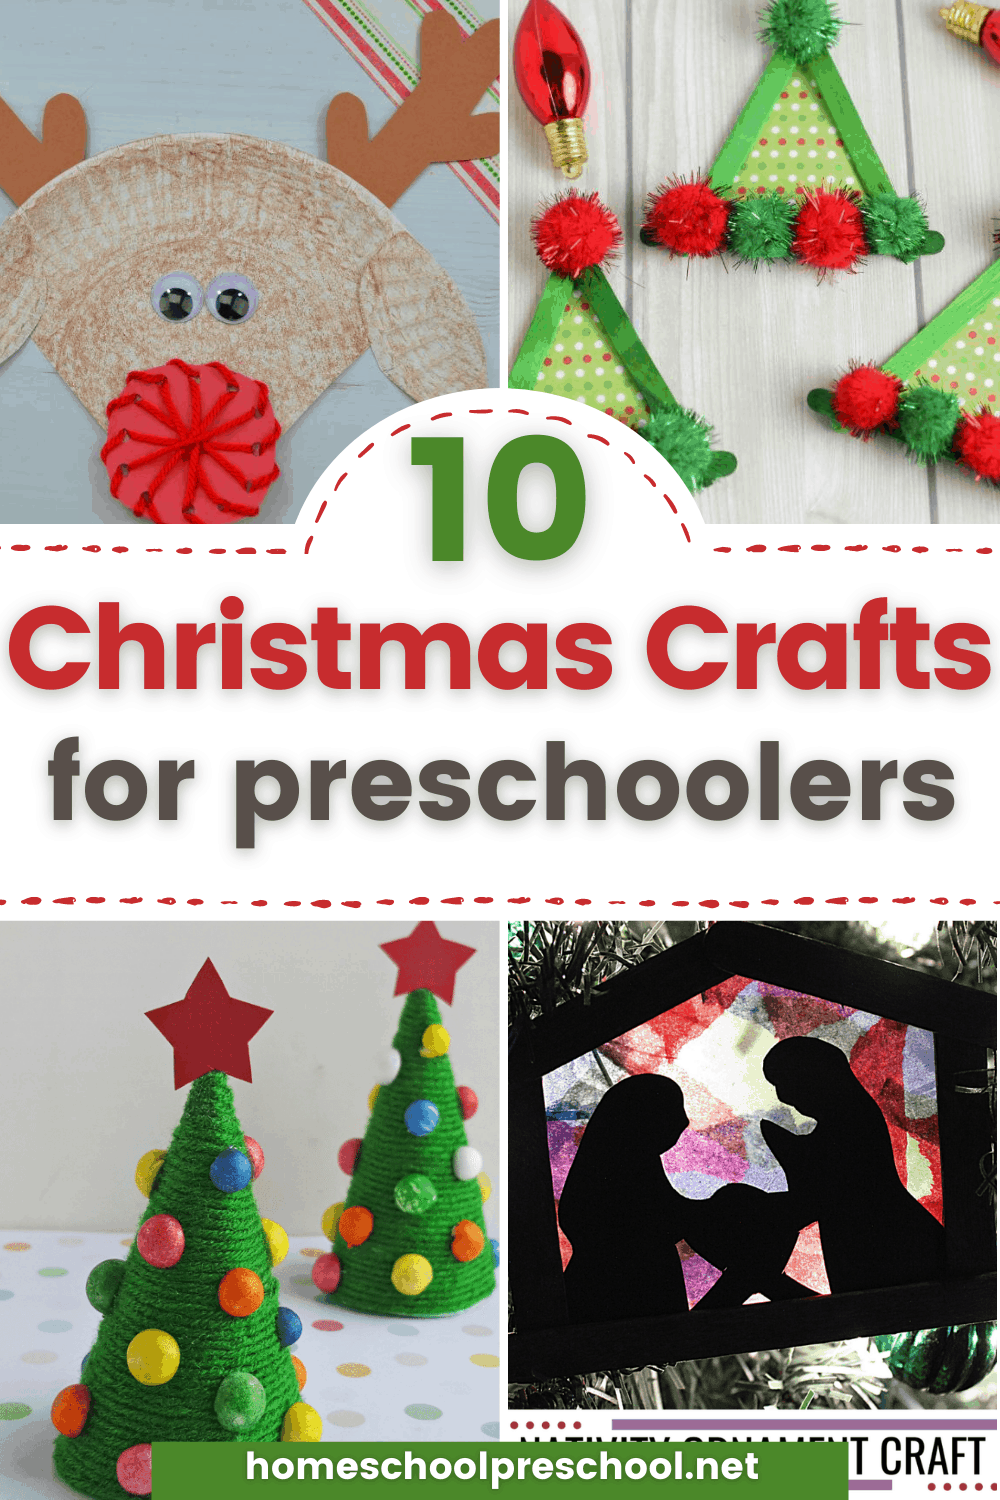 cmas-crafts-lp-2 Preschool Christmas Crafts